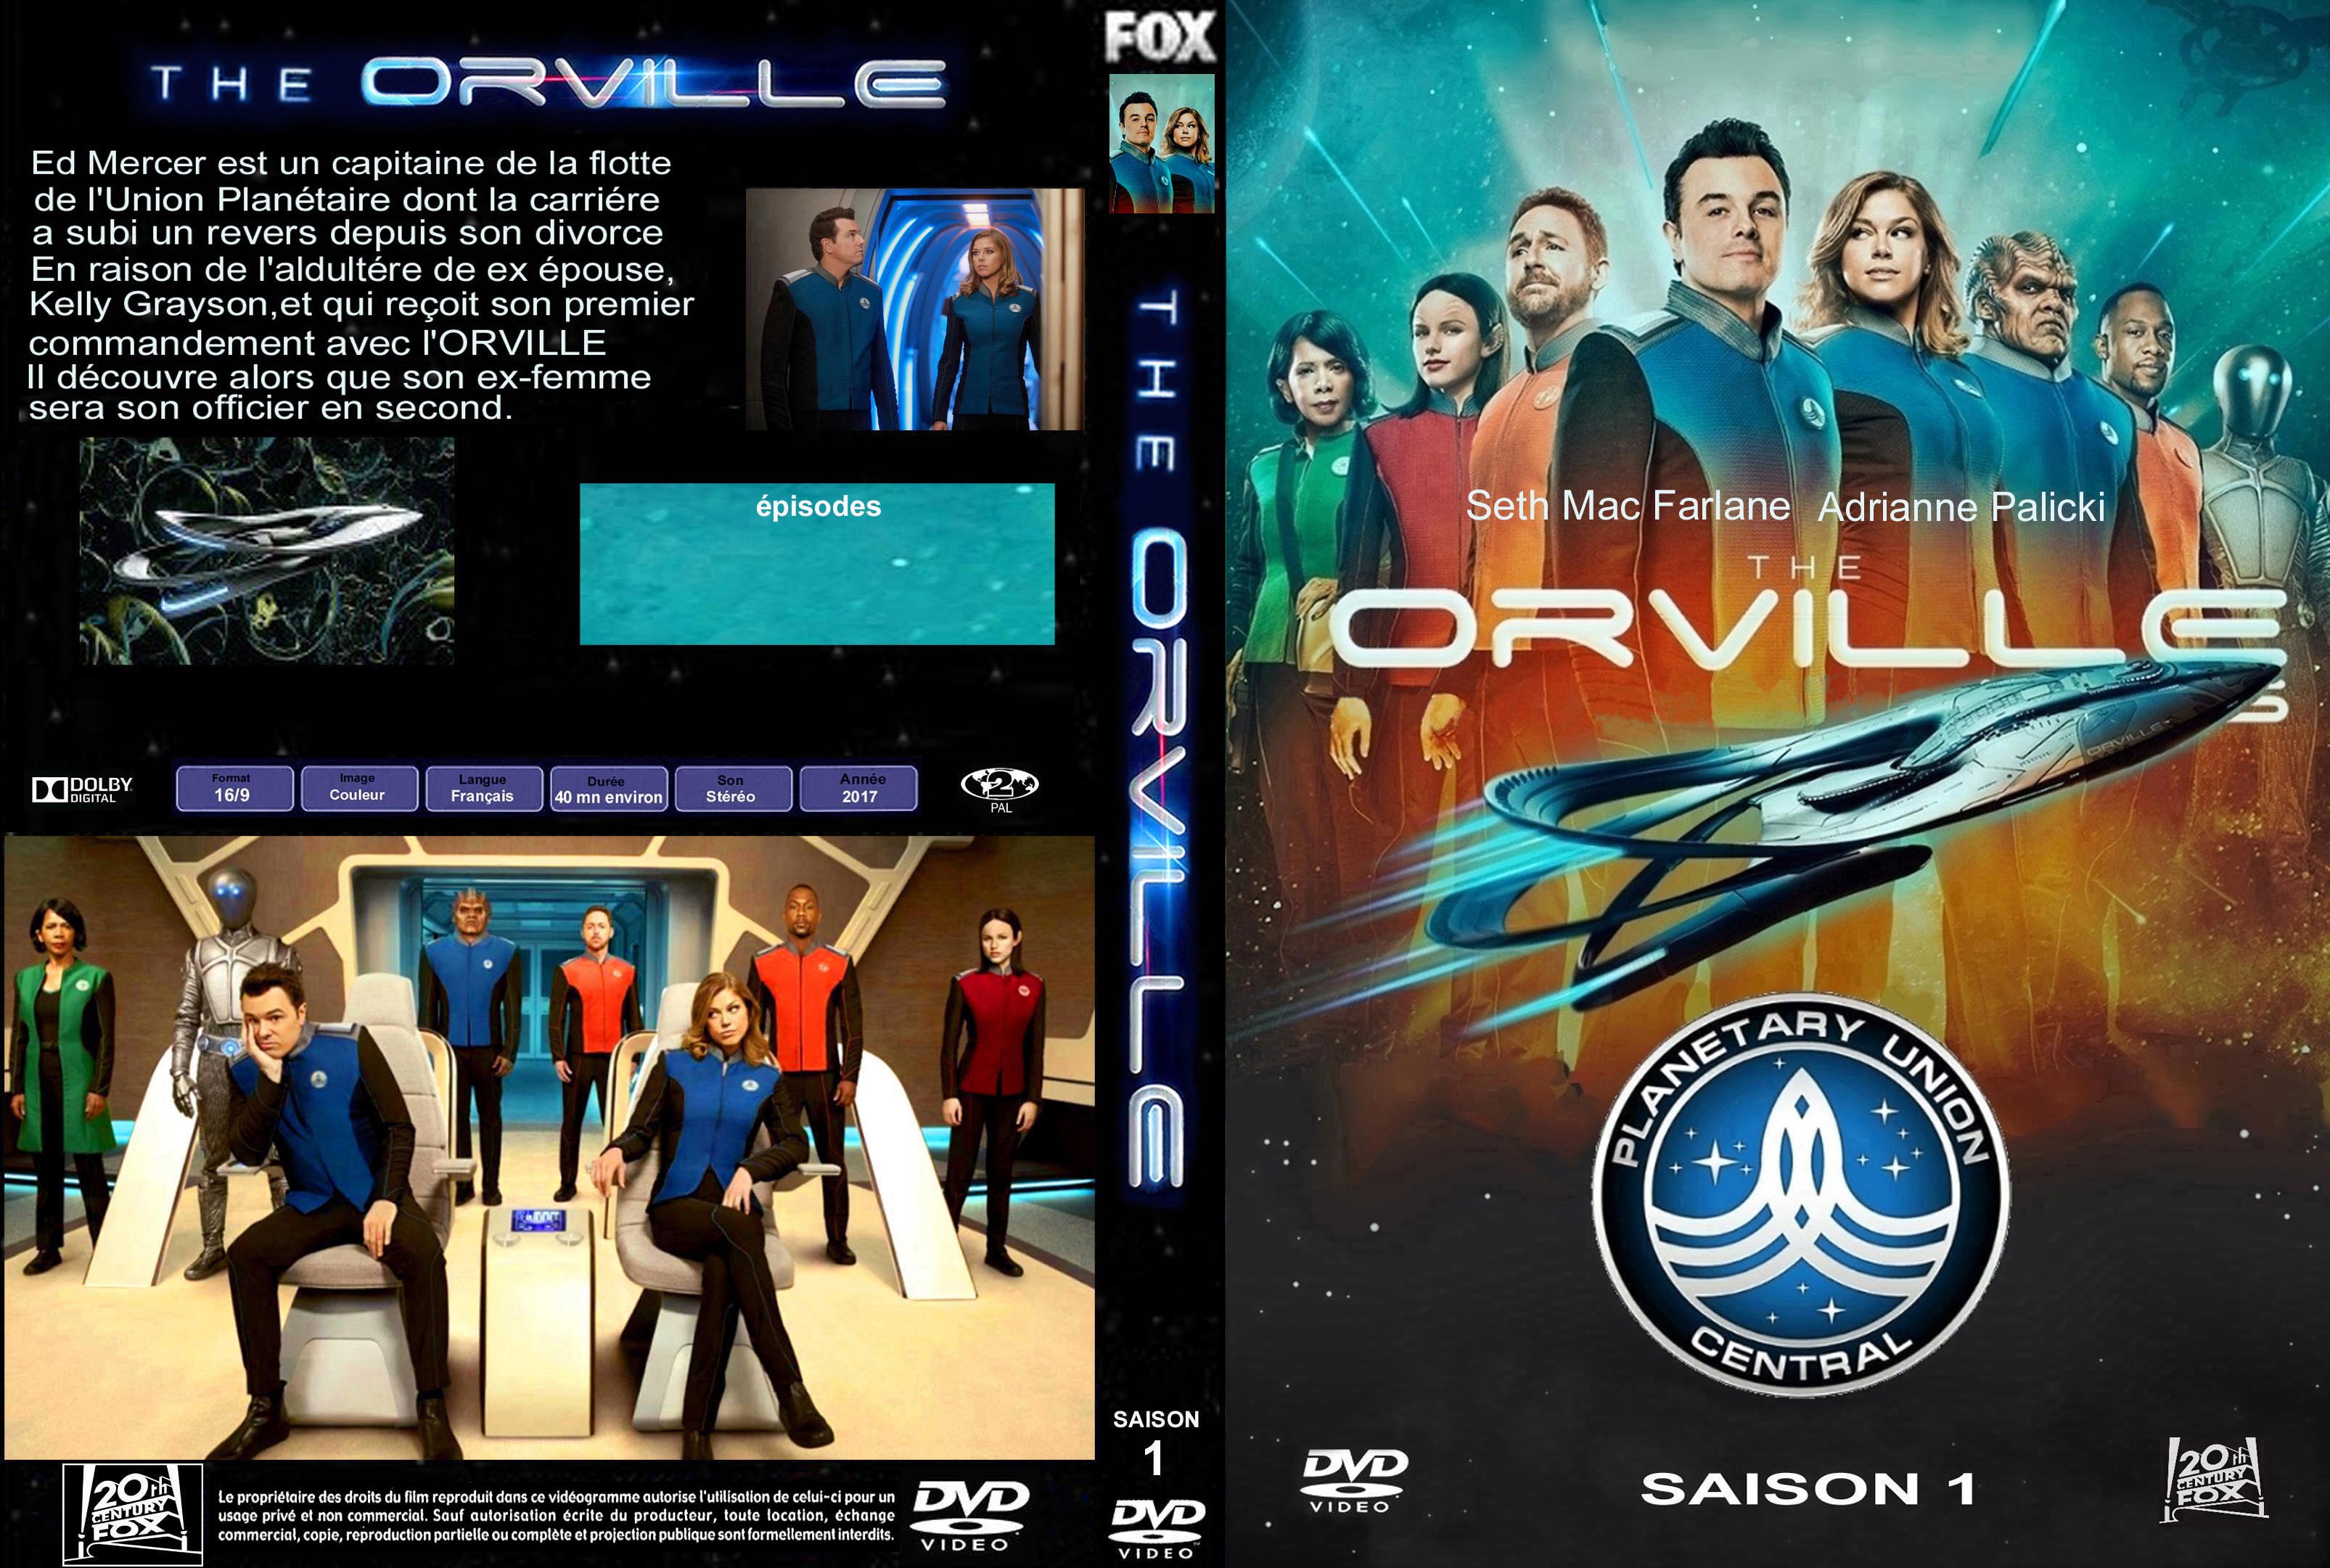 Jaquette DVD The orville saison 1 custom